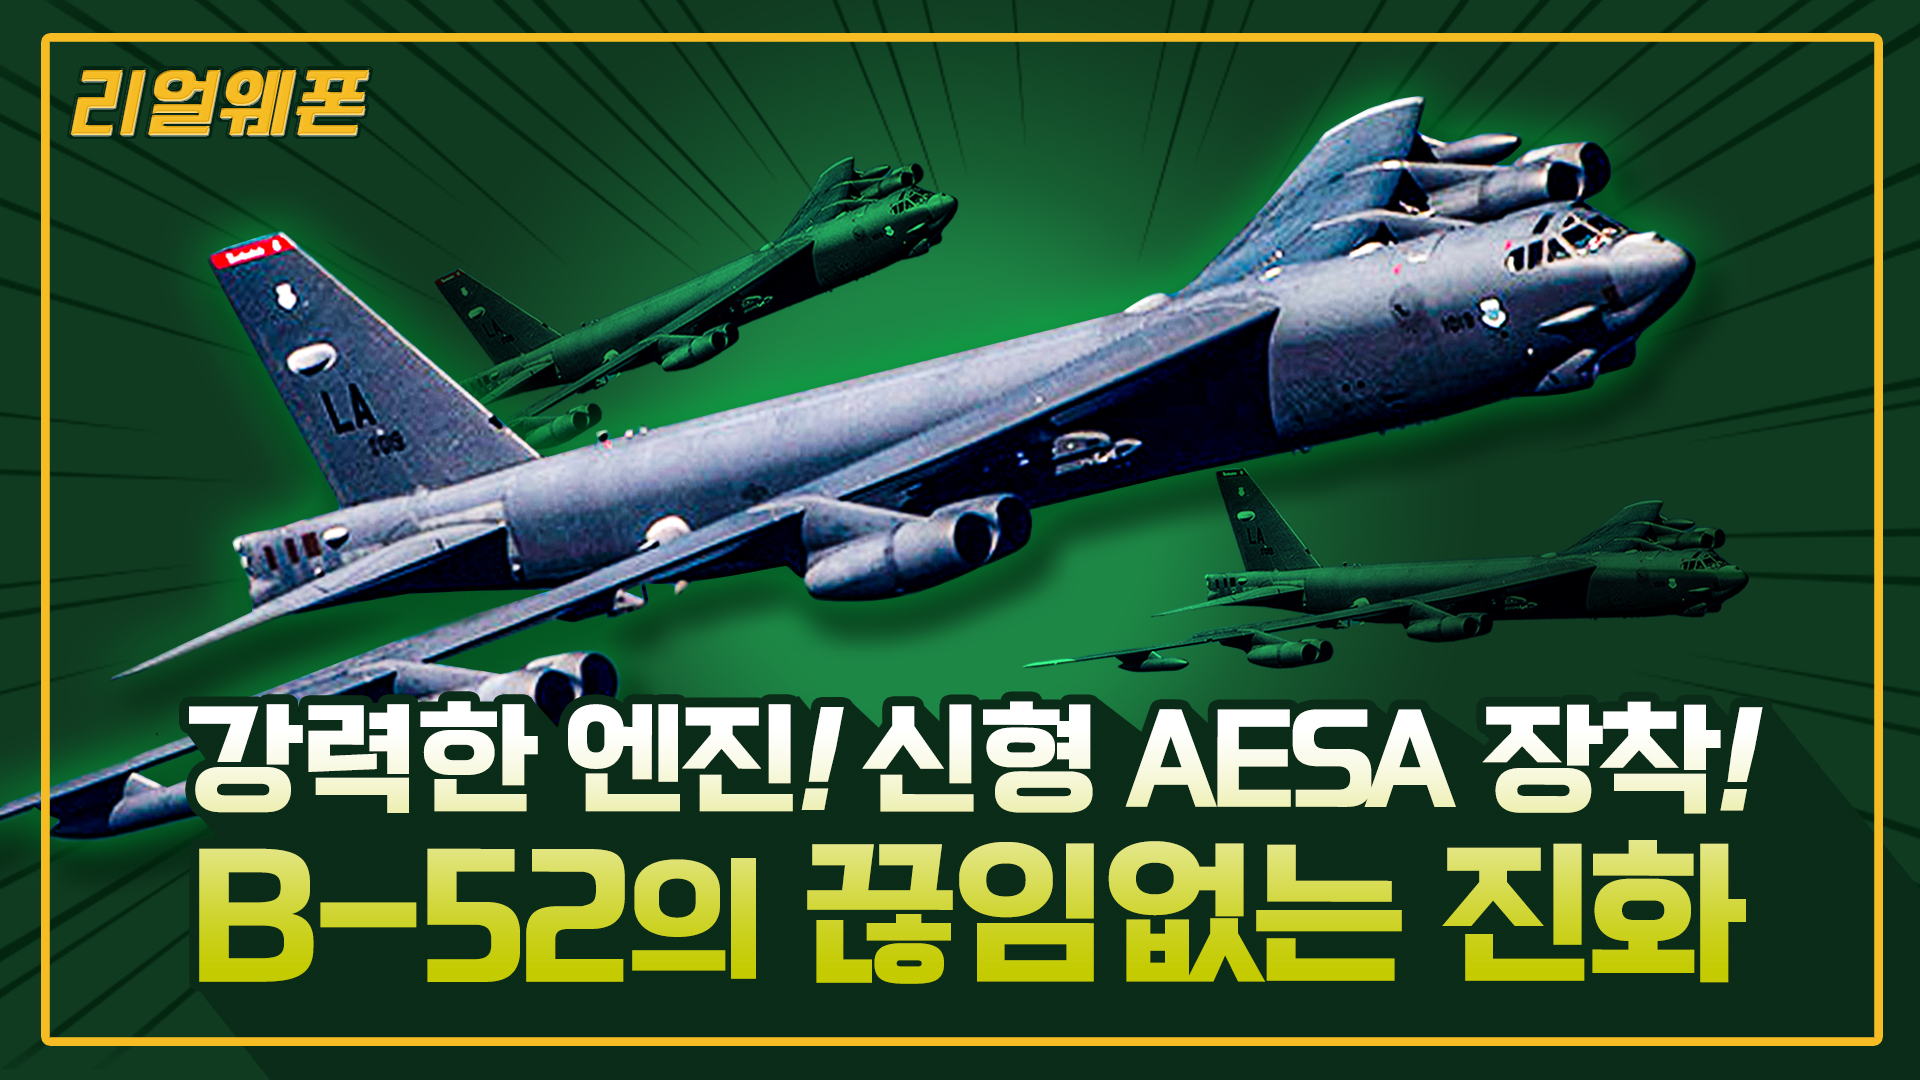 B-52의 화려한 변신! ◇최강! 최장수! 폭격기 B-52 업그레이드 ☆리얼웨폰213